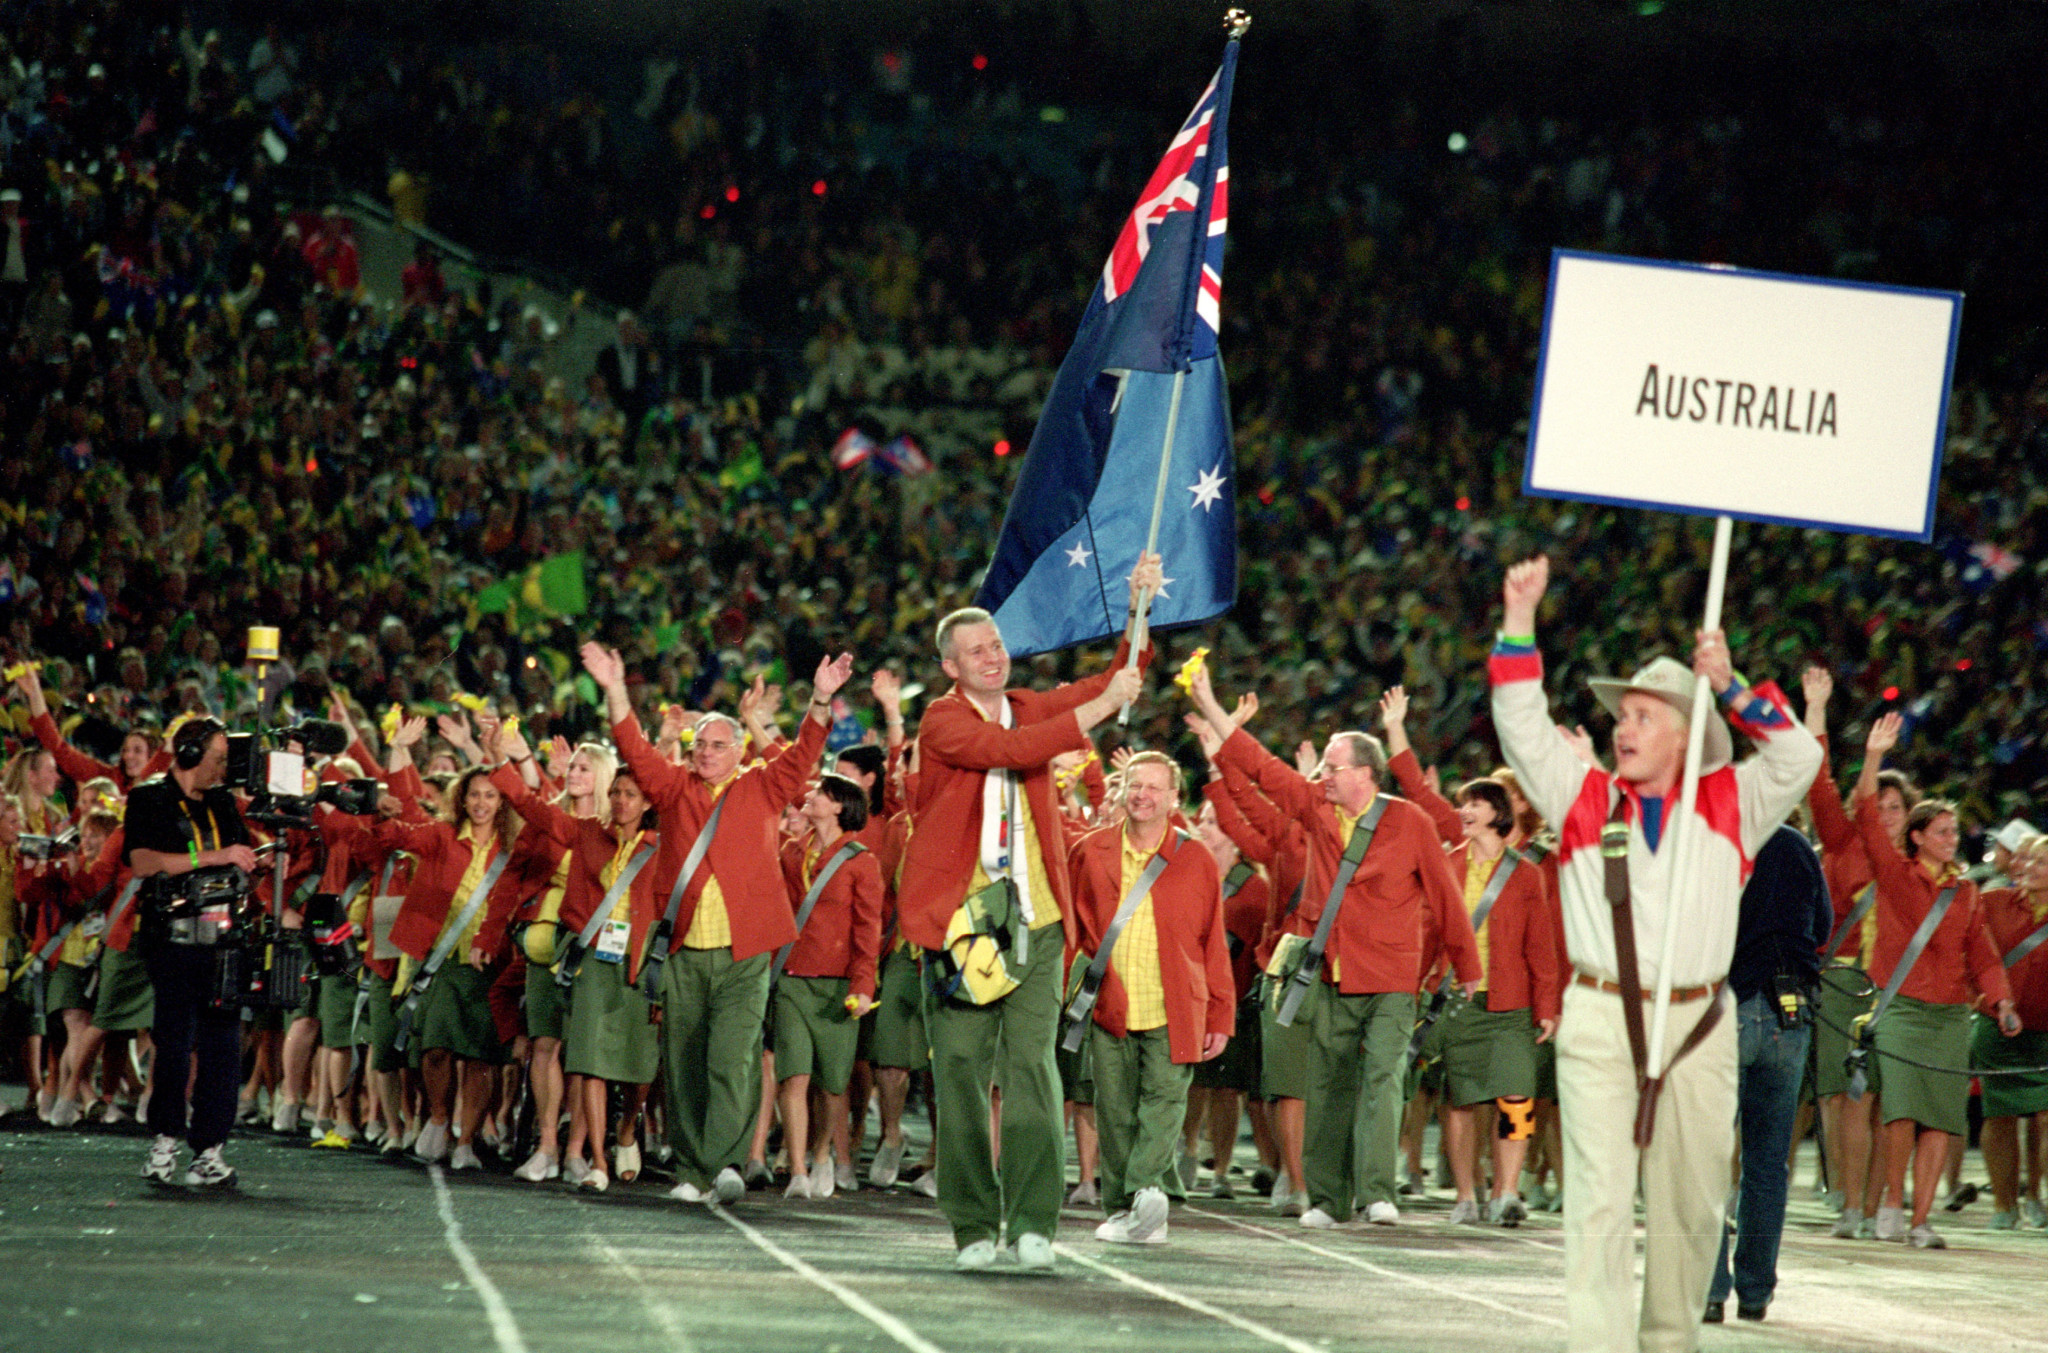 Australia's Sydney 2000 flag bearer says world "needs" Tokyo Olympics